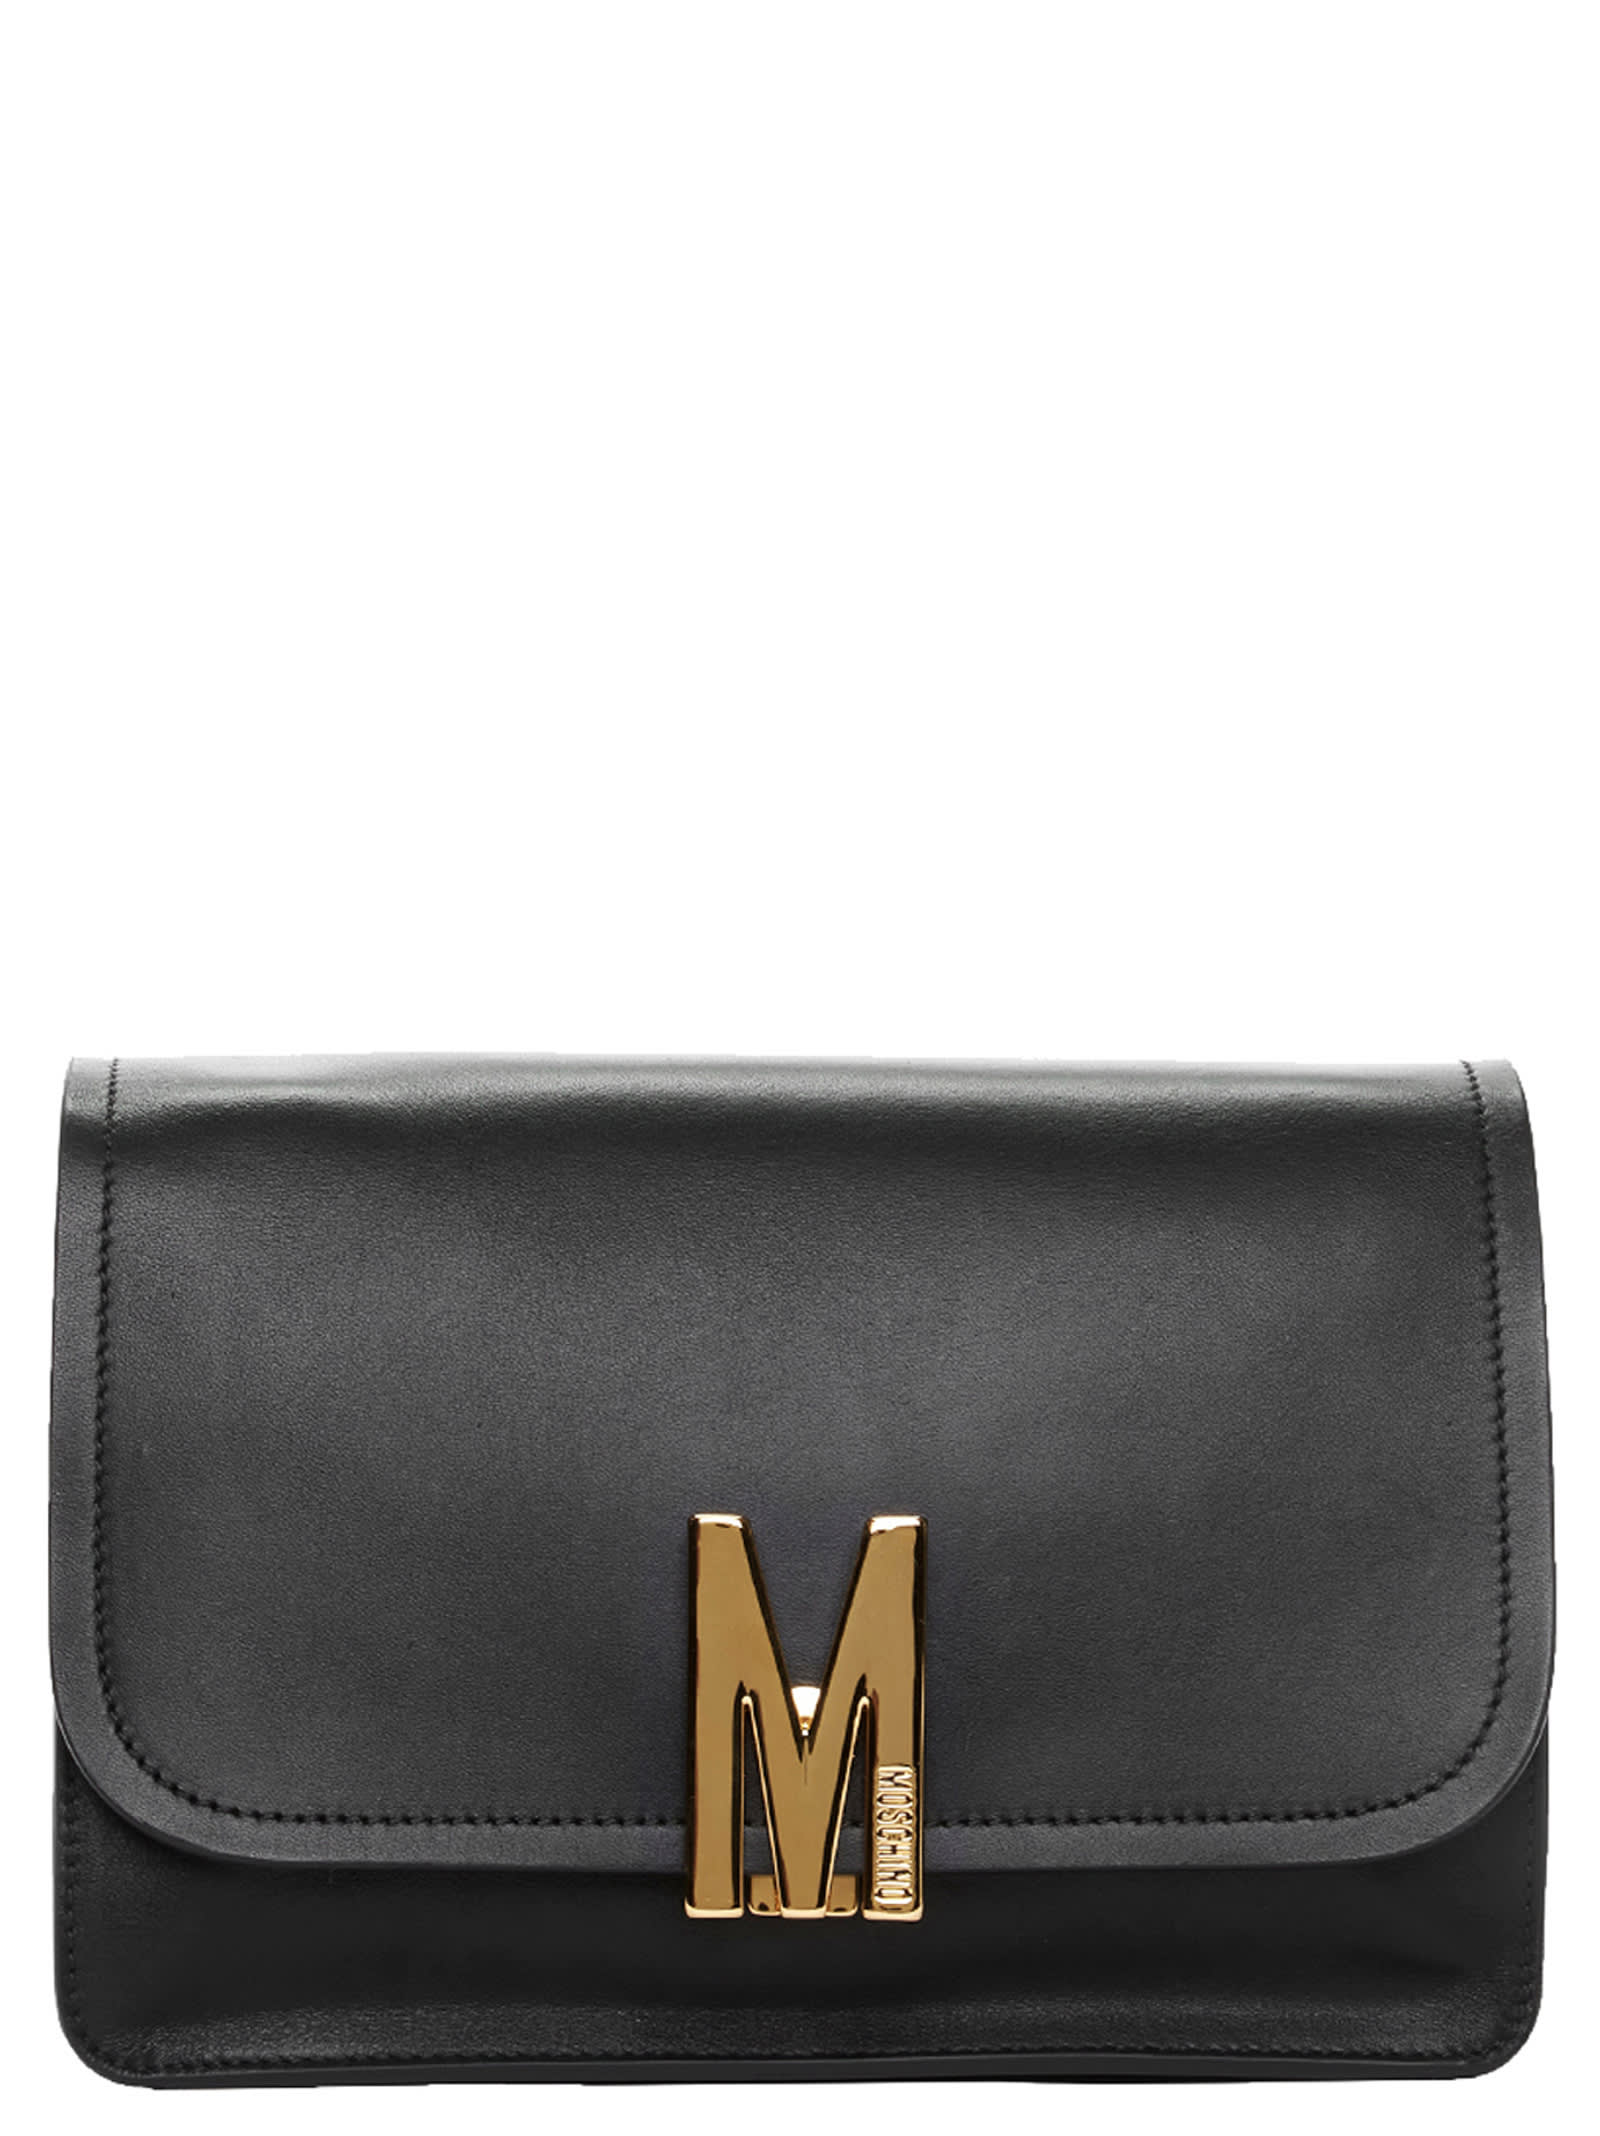 Moschino Metallic Logo Crossbody Bag